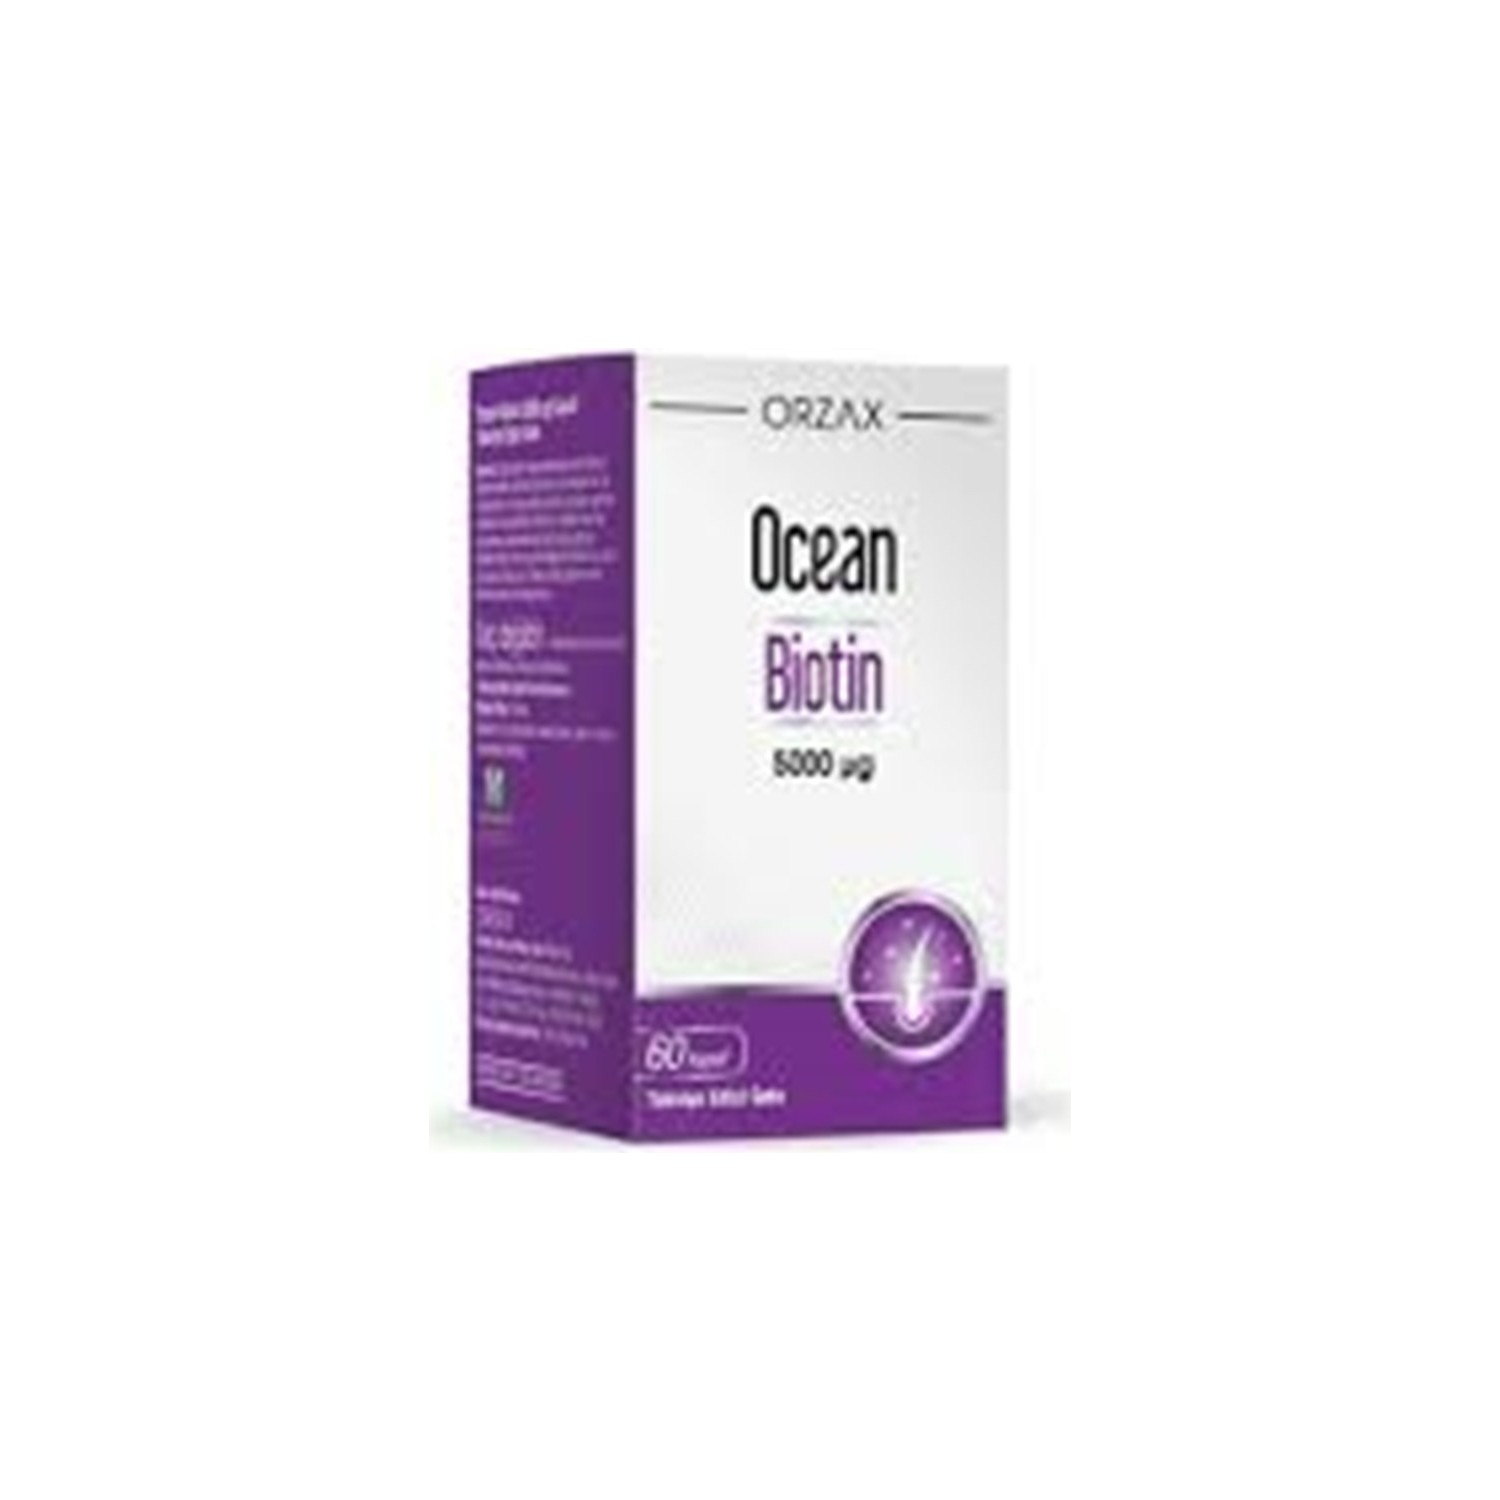 Пищевая добавка Ocean Biotin, 60 капсул 5000 мкг. пищевая добавка ocean biotin 60 капсул 5000 мкг